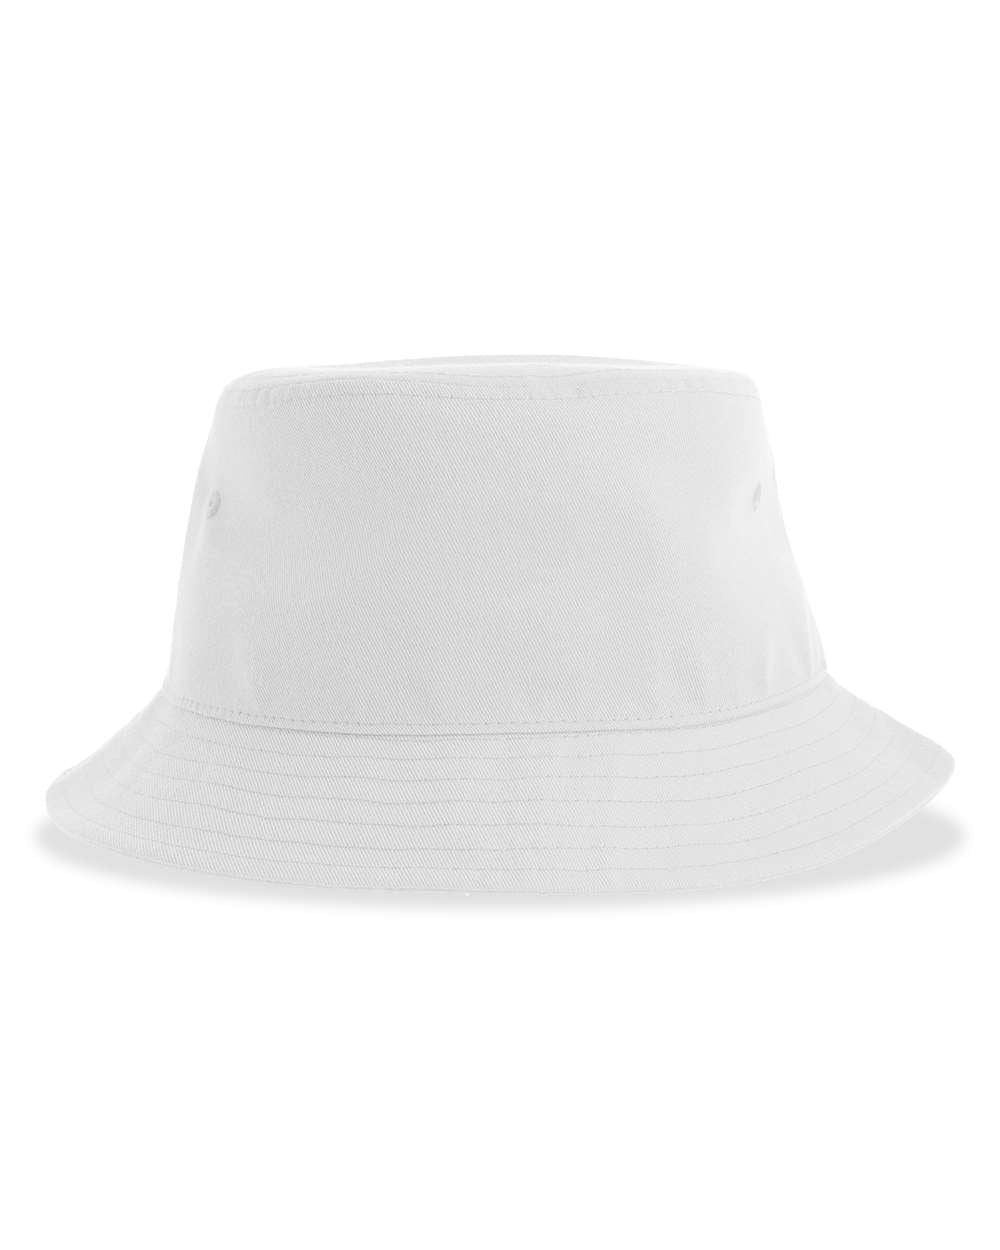 Customizable Atlantis Headwear Geob Bucket Hat in white